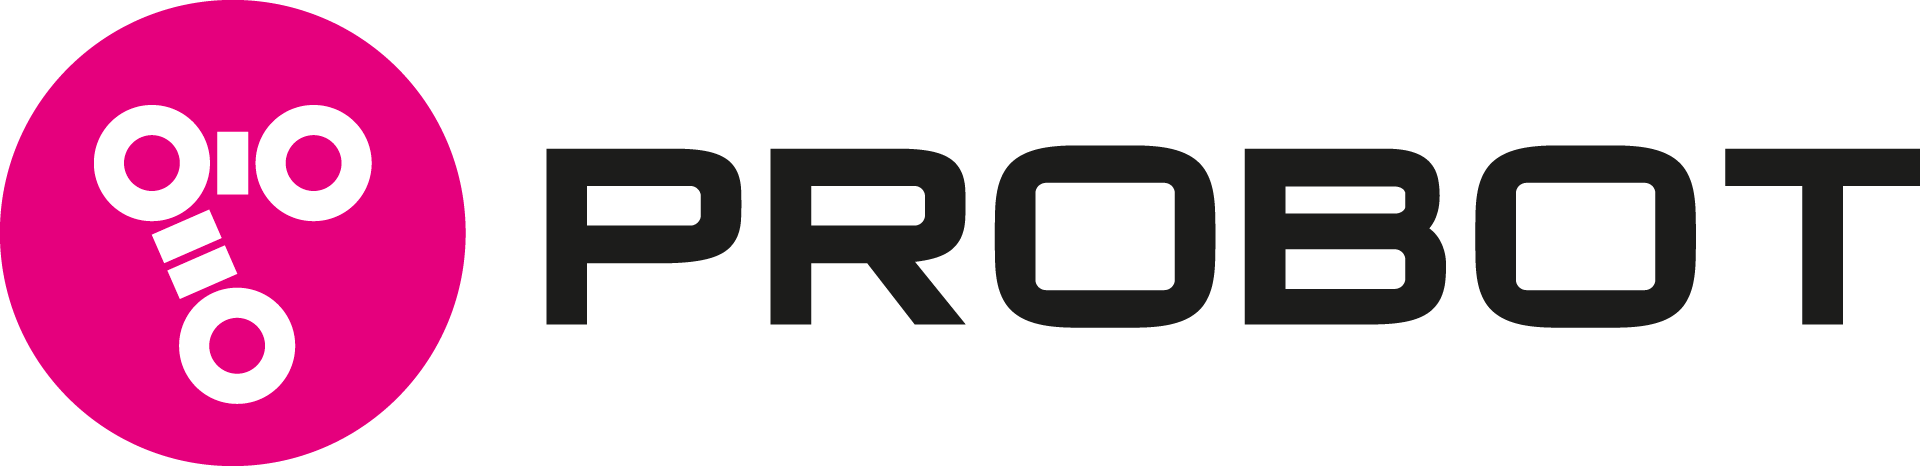 Probot Logo